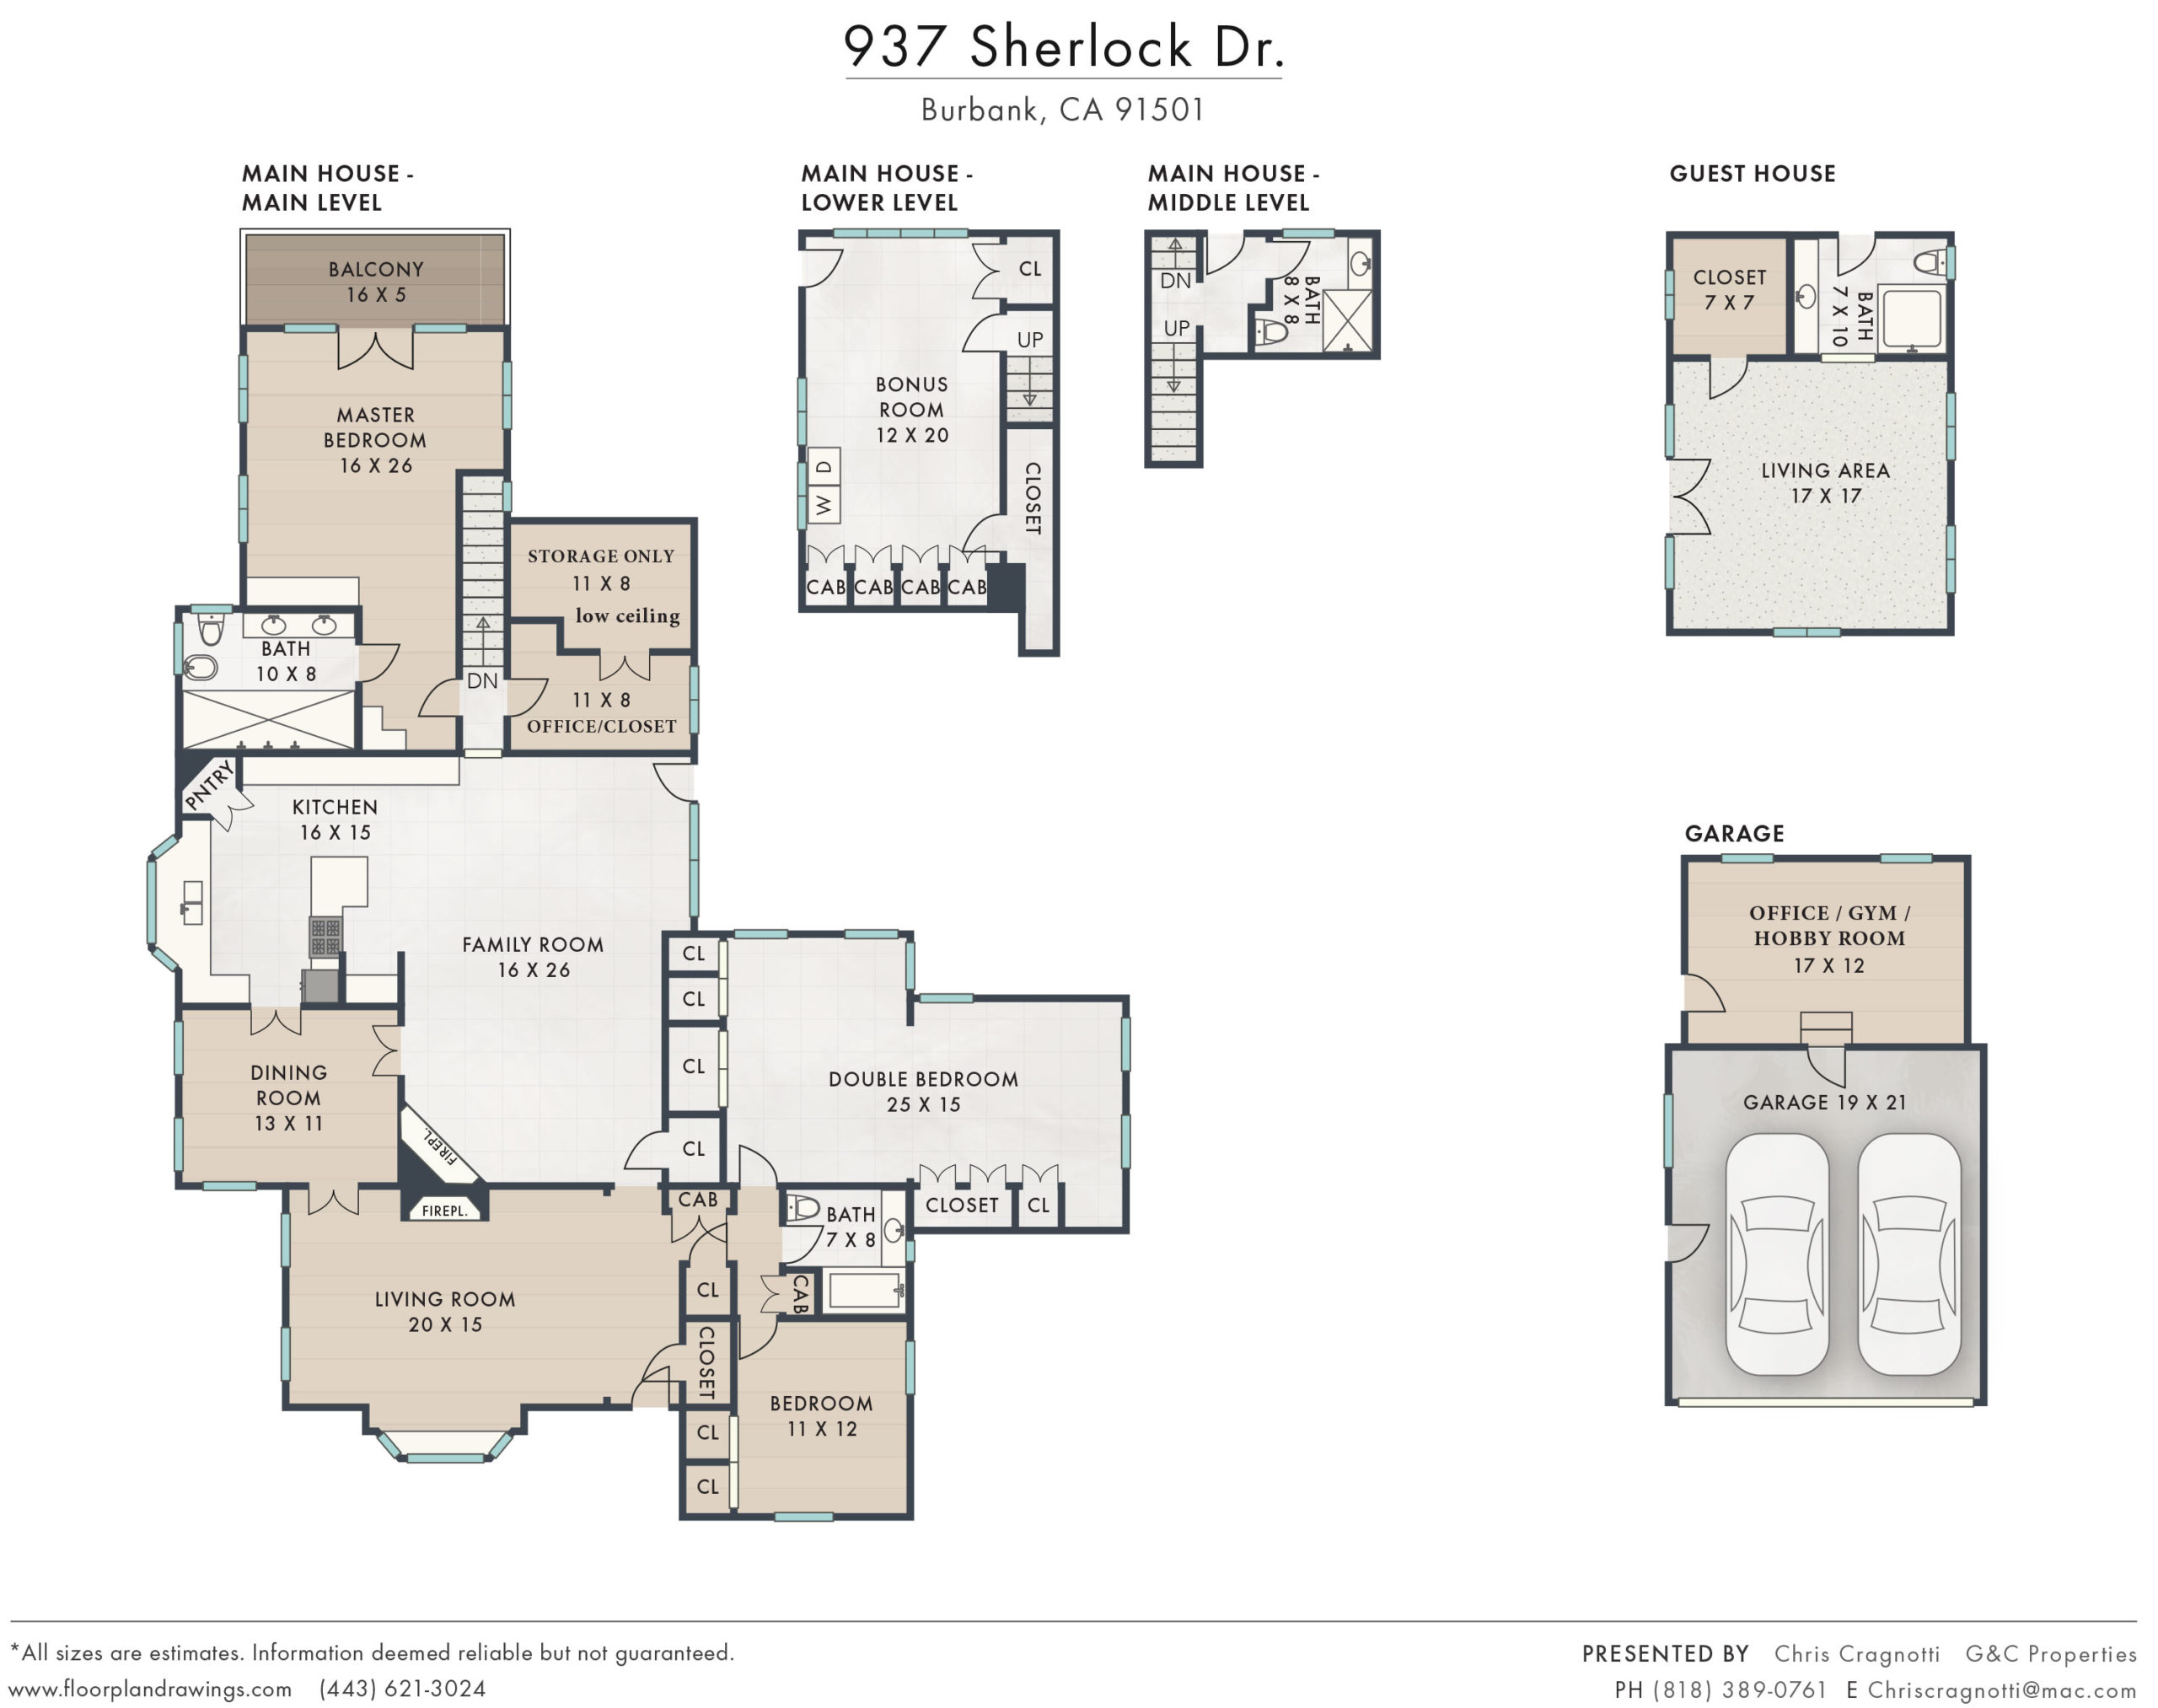 937 Sherlock Dr. Floorplan